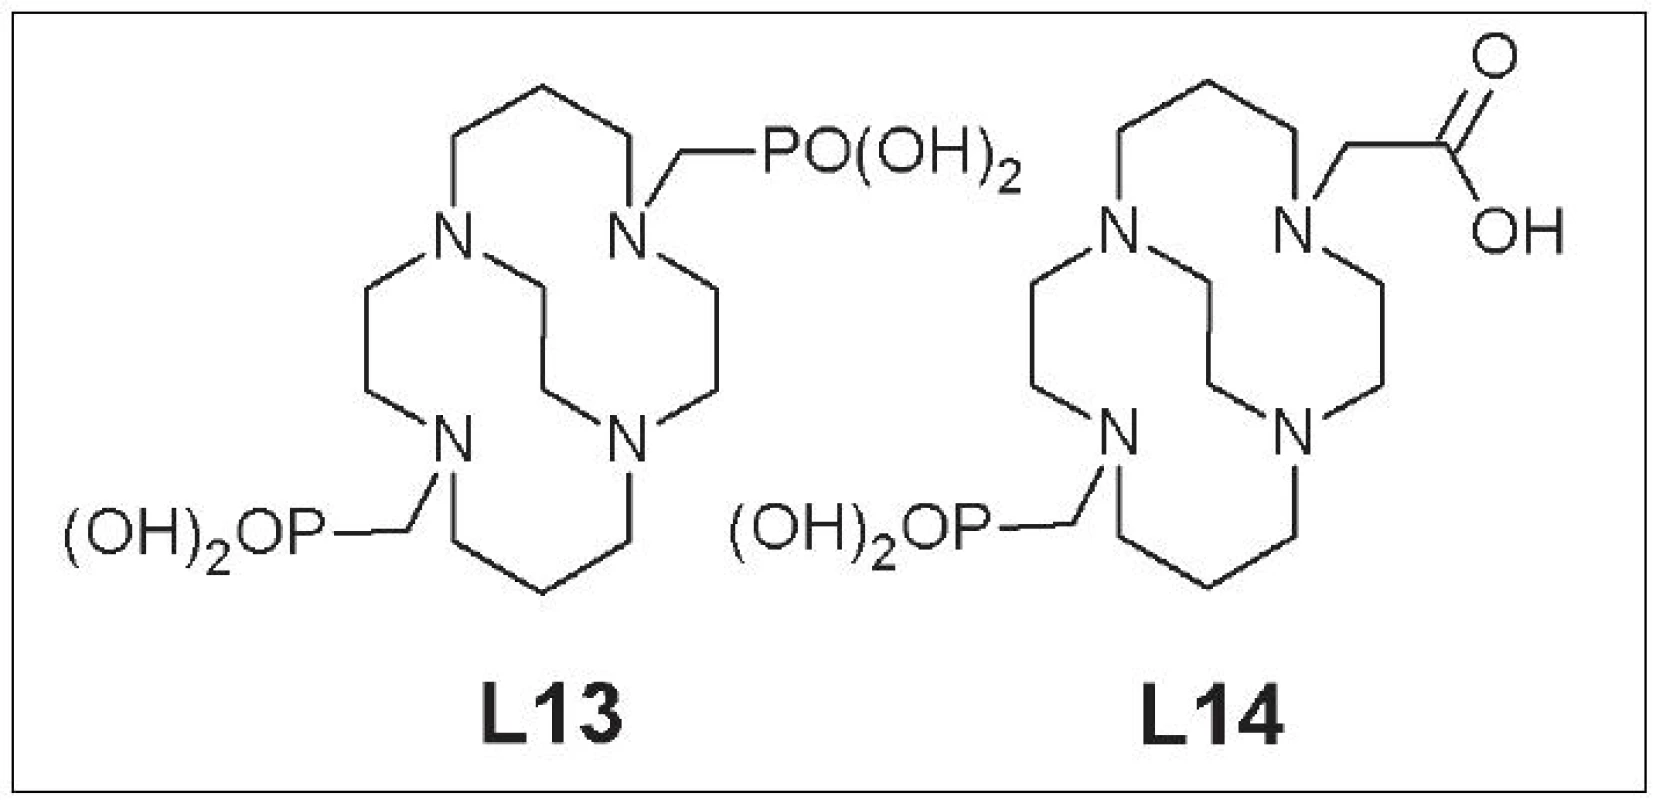 CB-TE2P (L13), CB-TE1A1P (L14).